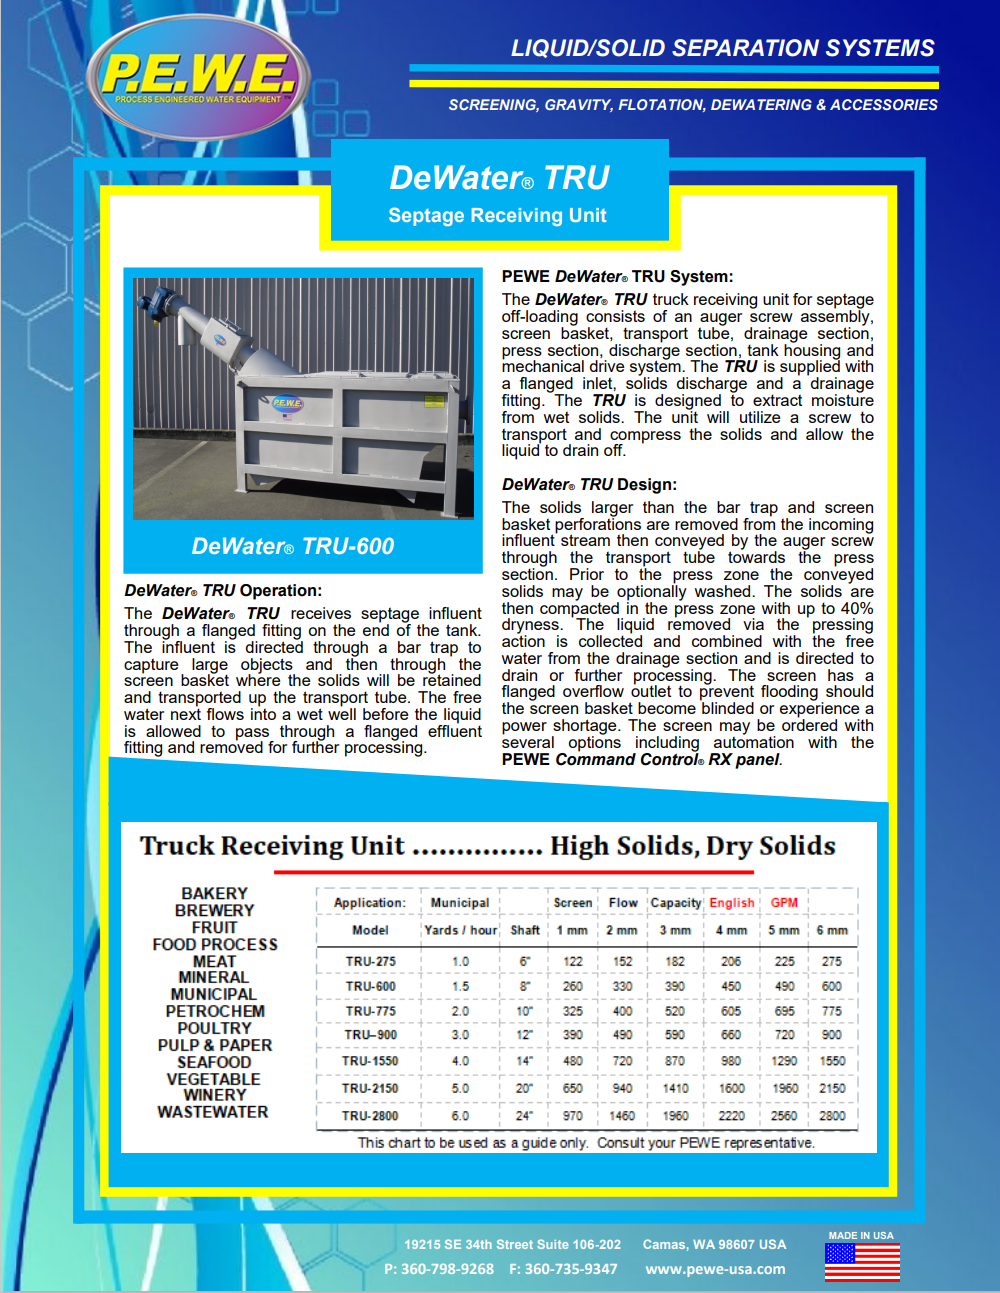 PREVIEW-DeWater-TRU-brochure-012122.png